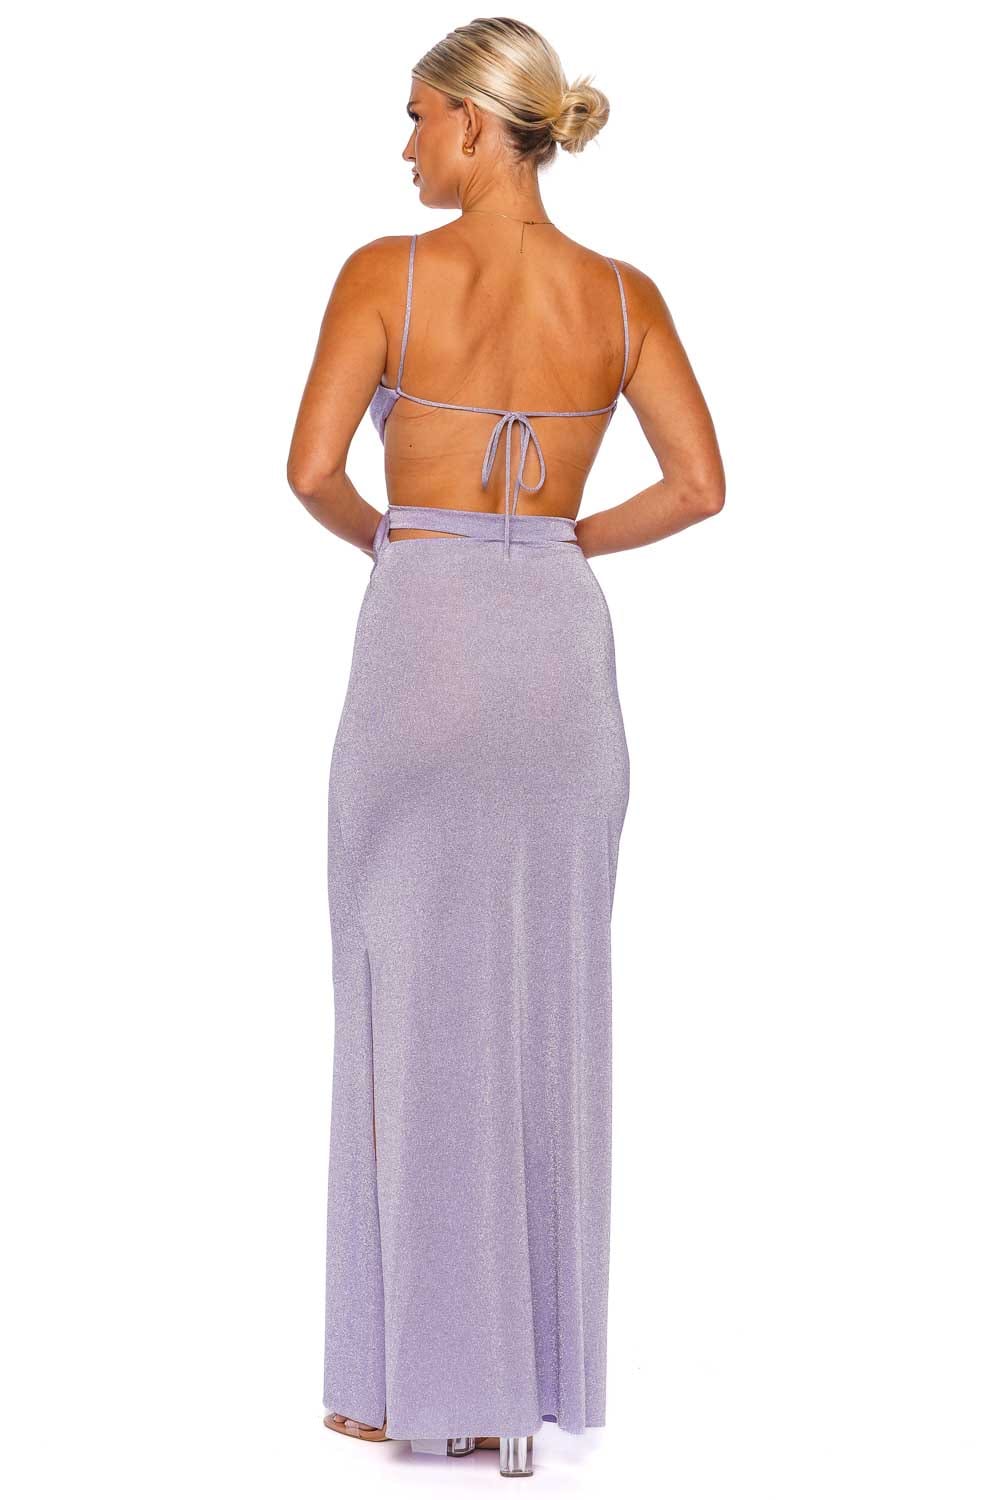 BAOBAB Arlett Lavender Cut Out Maxi Dress